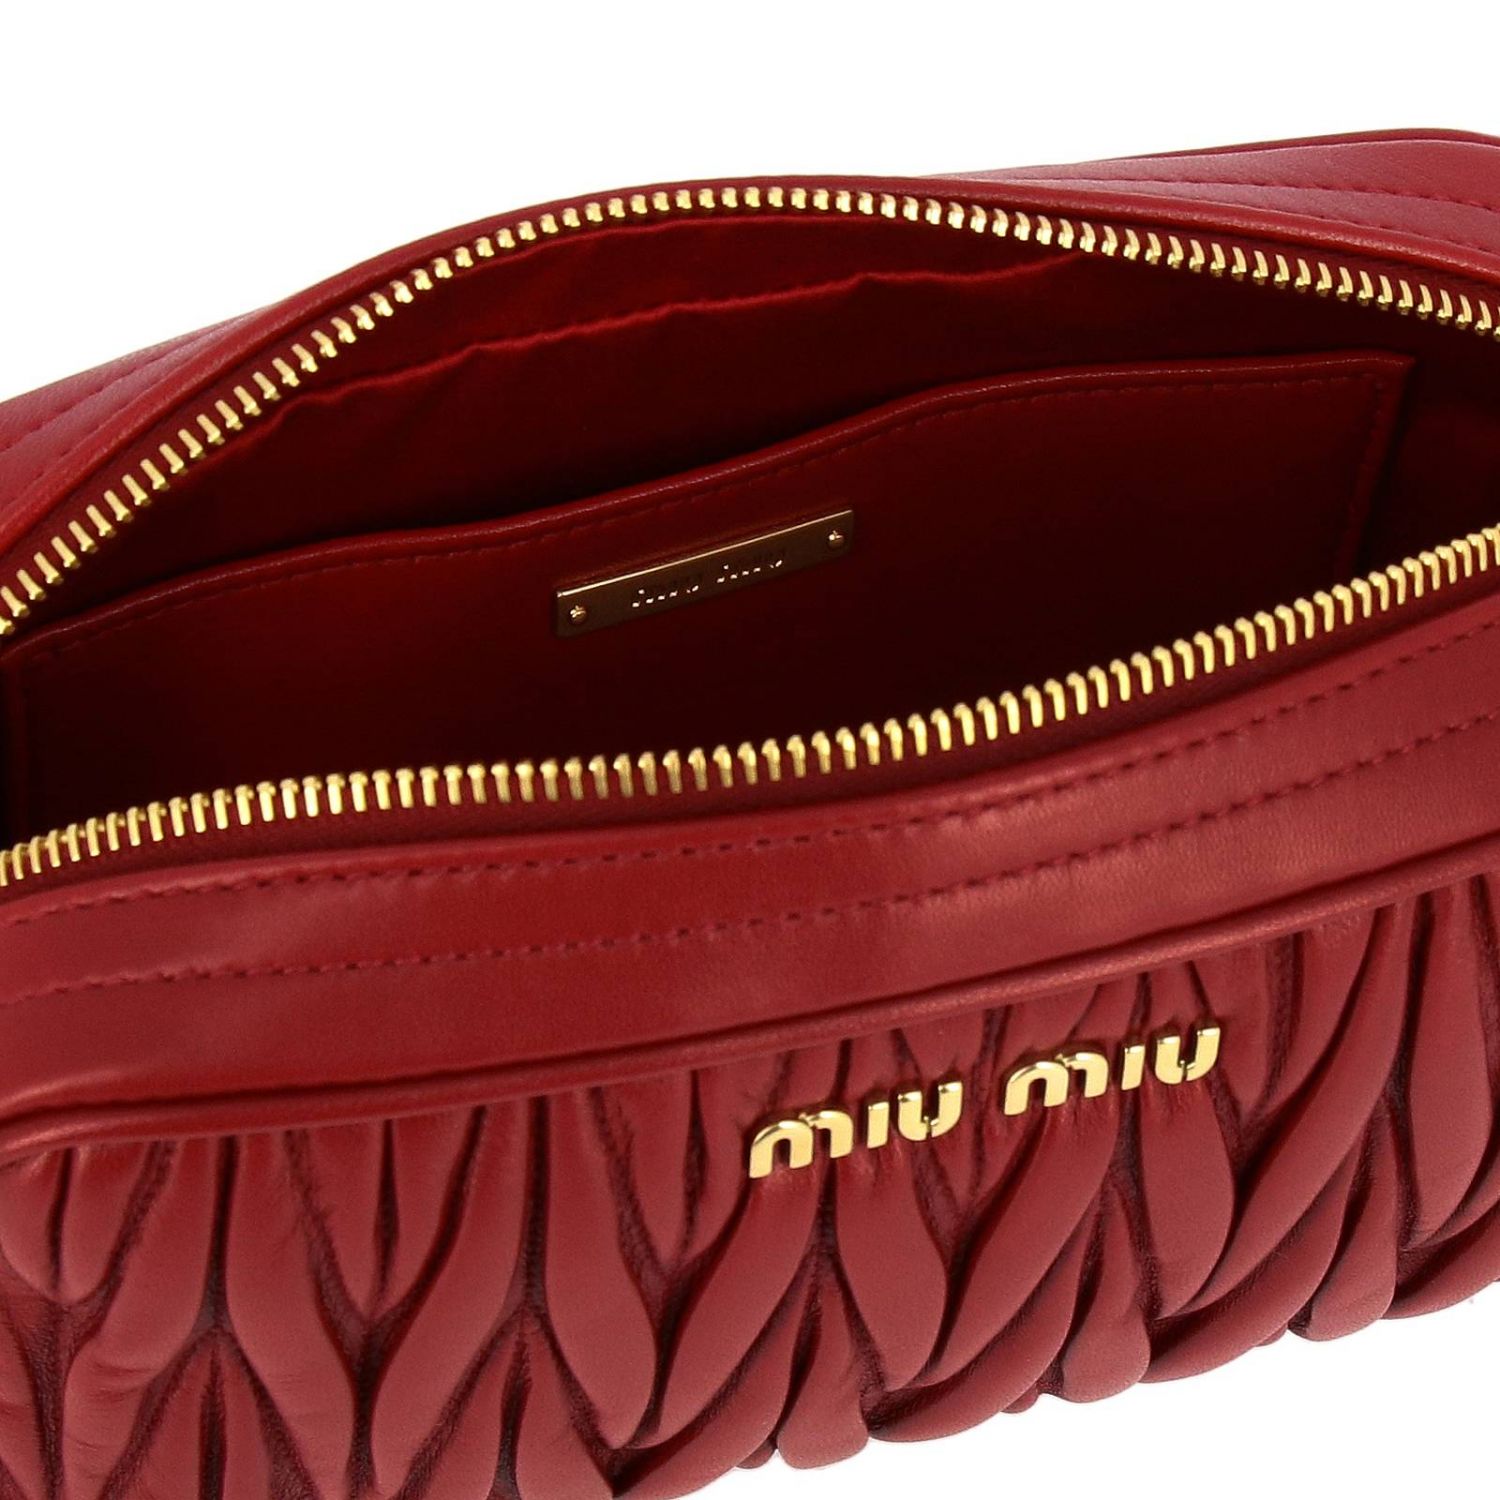 MIU MIU: Camera bag bag in matelassé leather - Red | Miu Miu crossbody ...